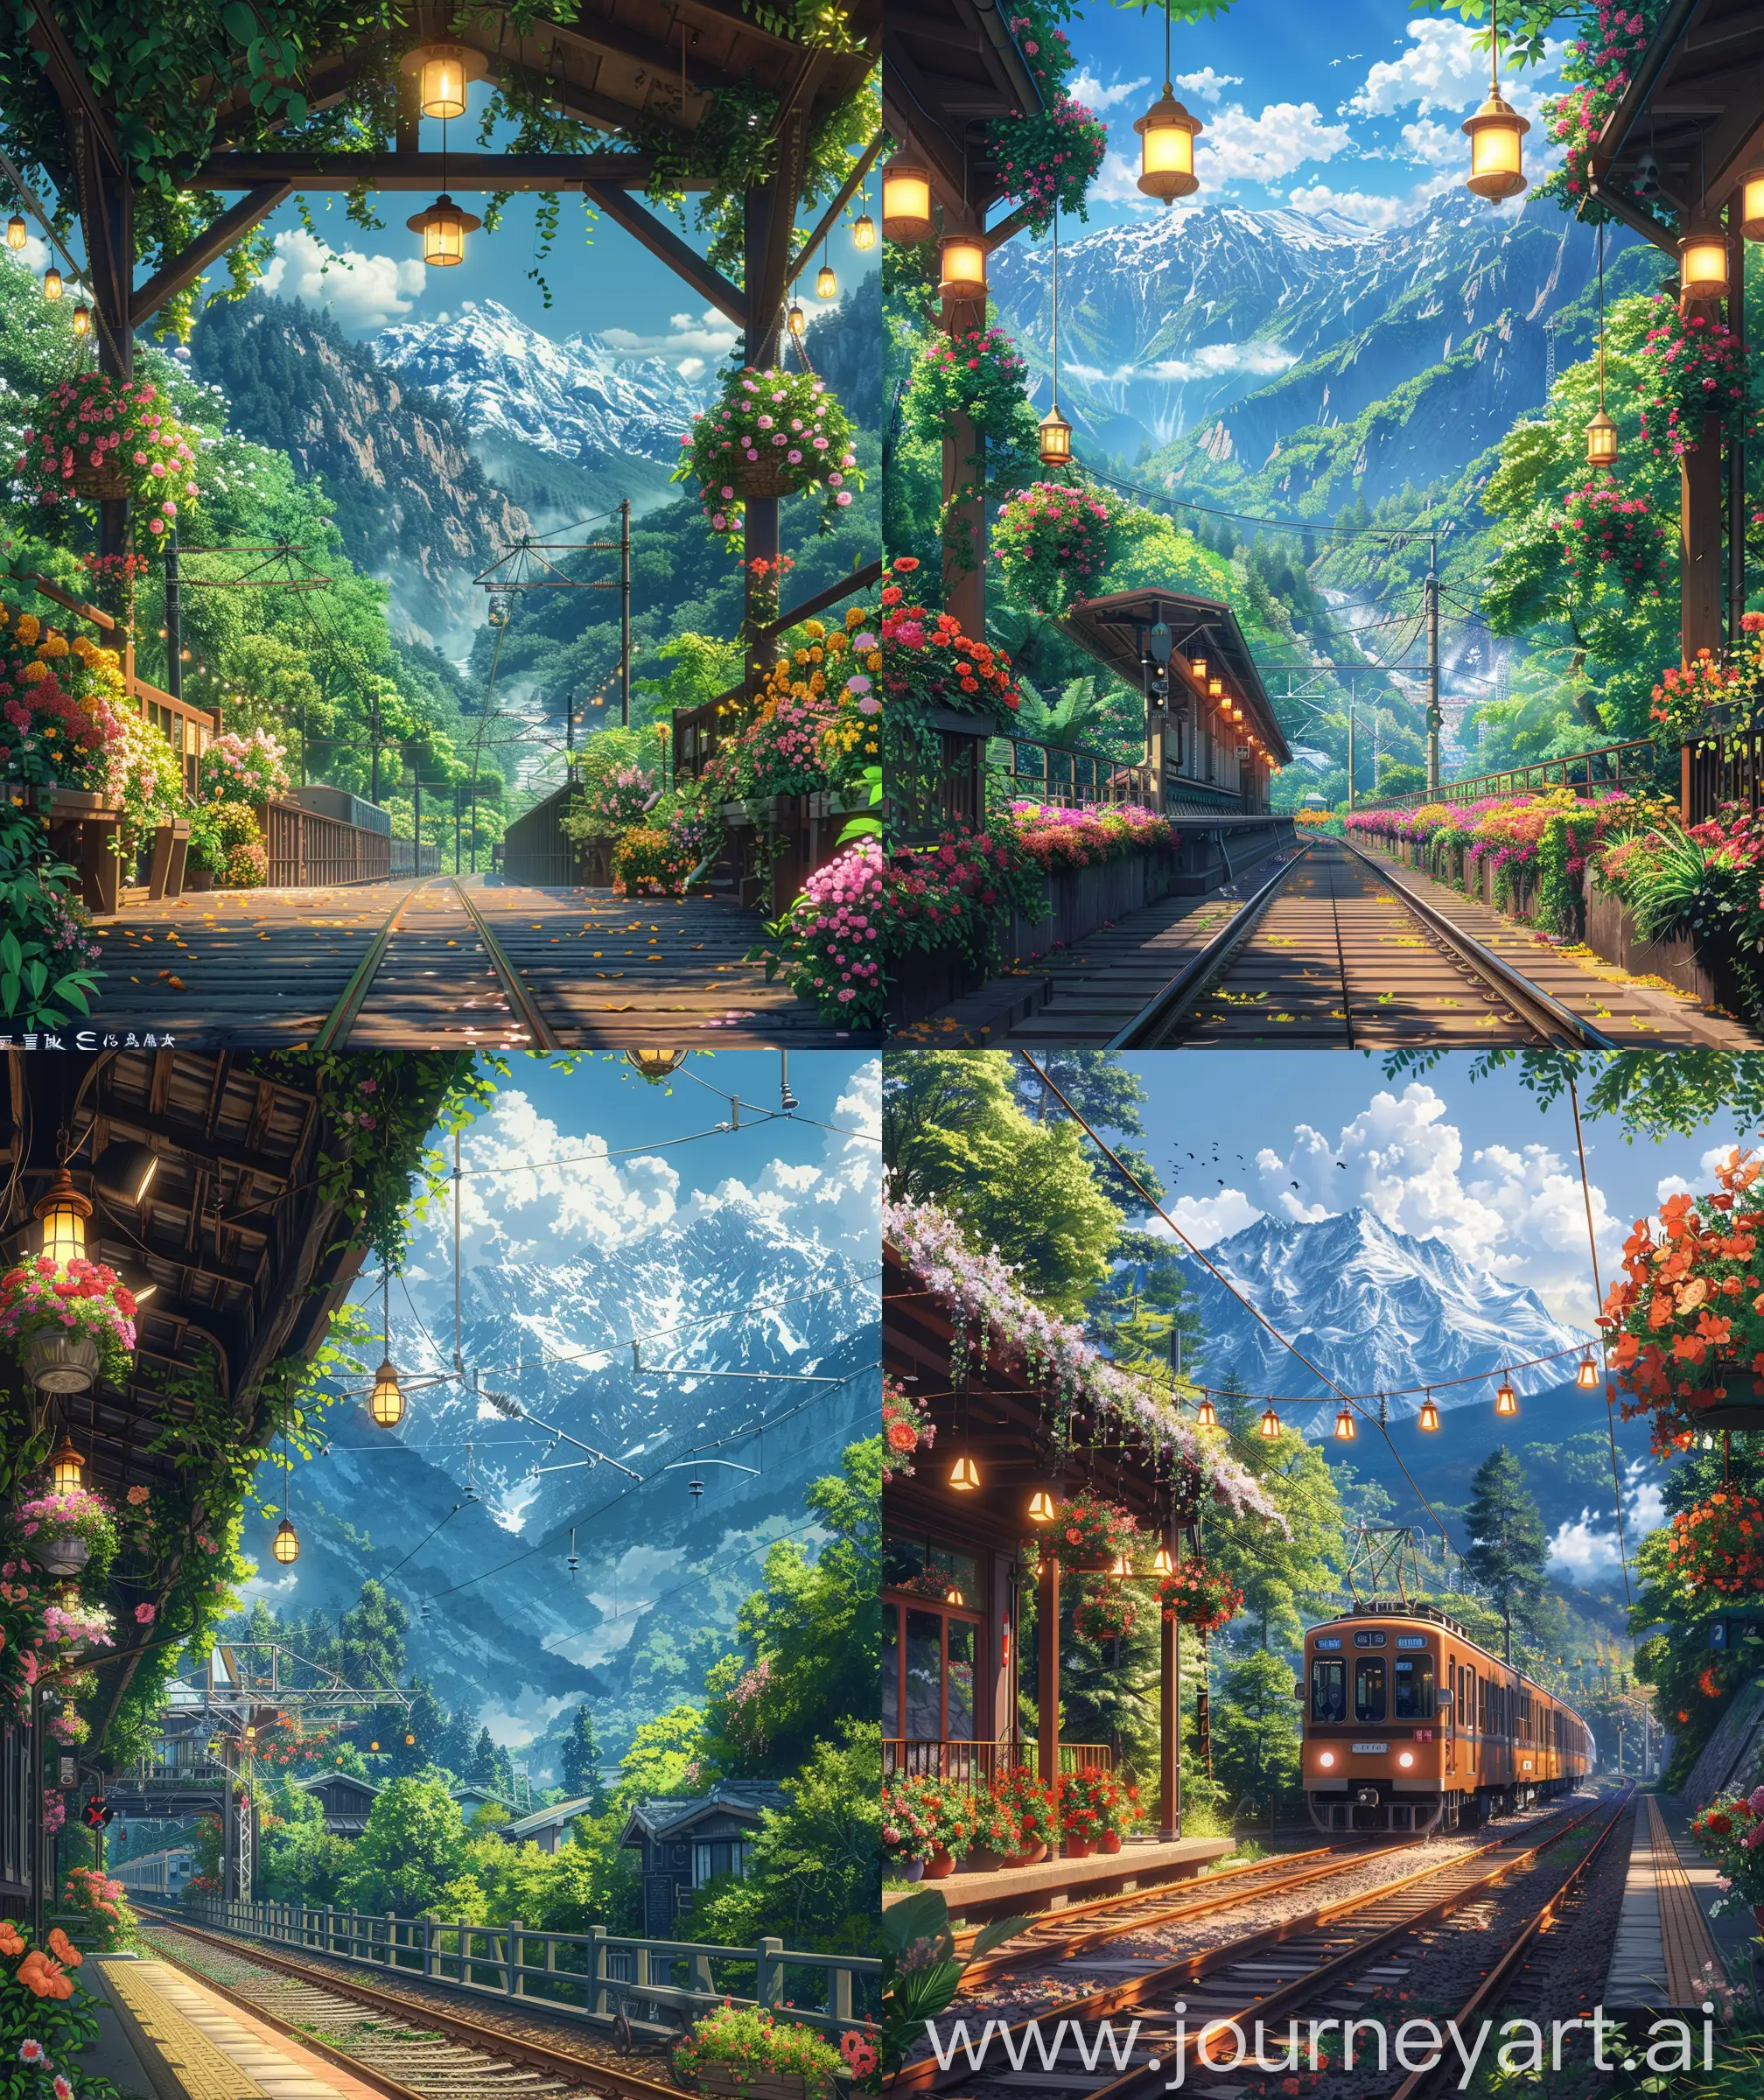 Scenic-Anime-Illustration-Daytime-Train-Journey-Through-Mountainous-Landscape-with-Spring-Flowers